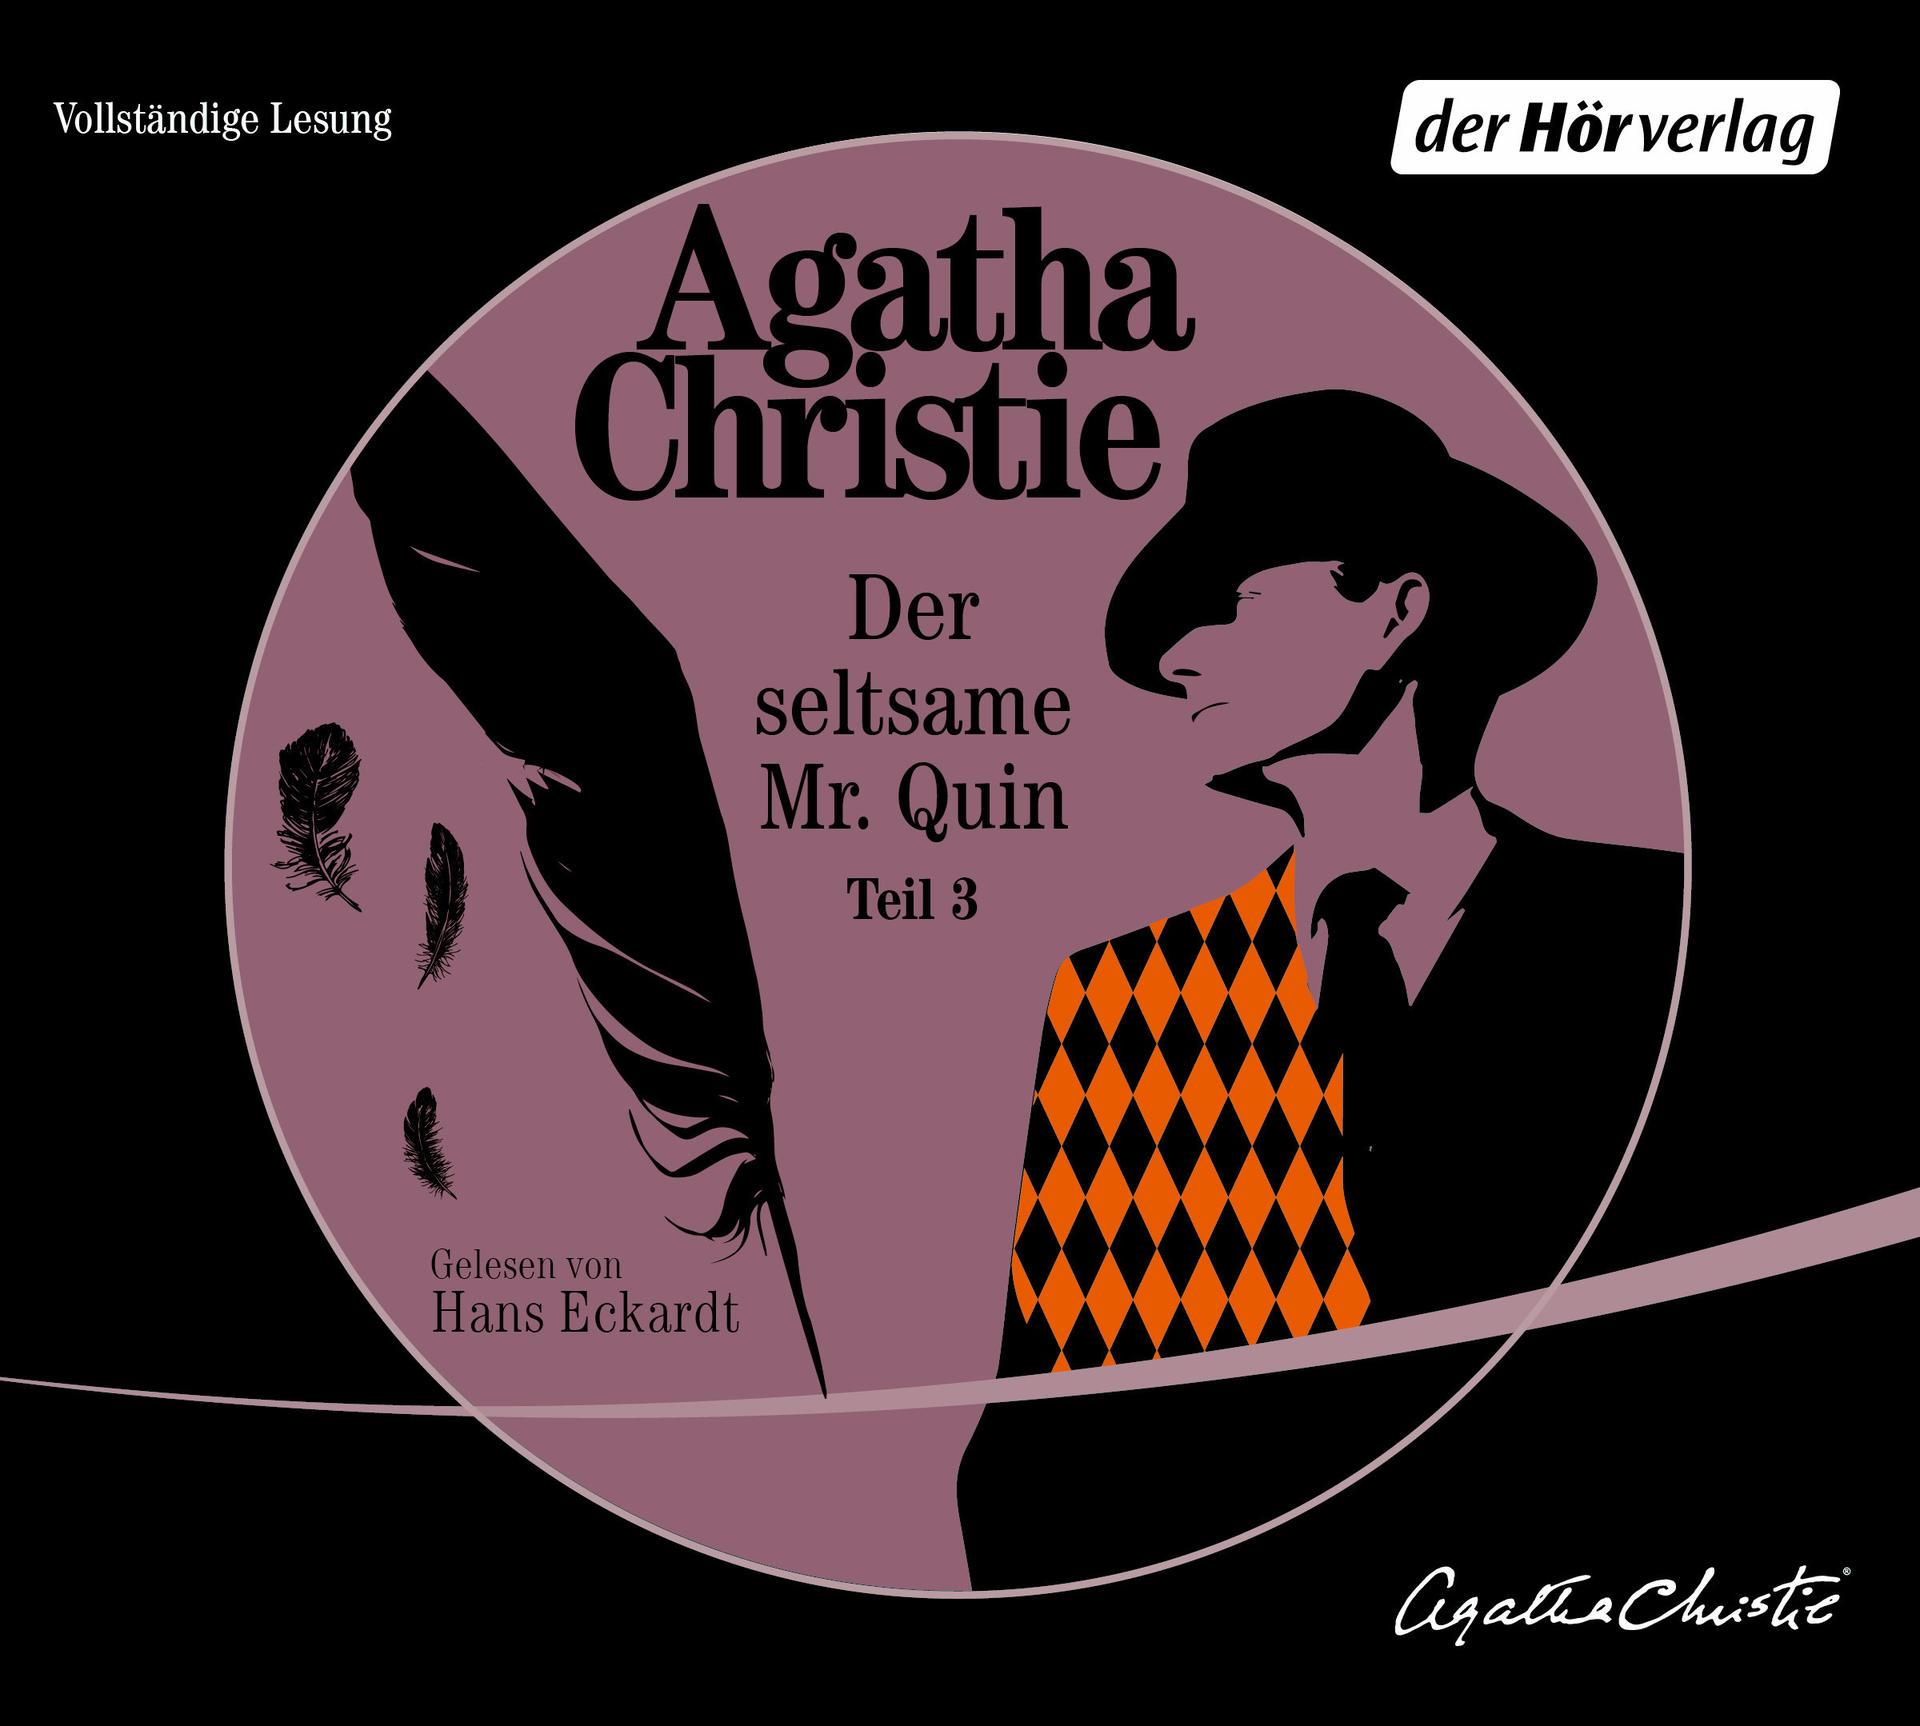 seltsame (CD) Agatha Quin 3 Christie Der Mister - -